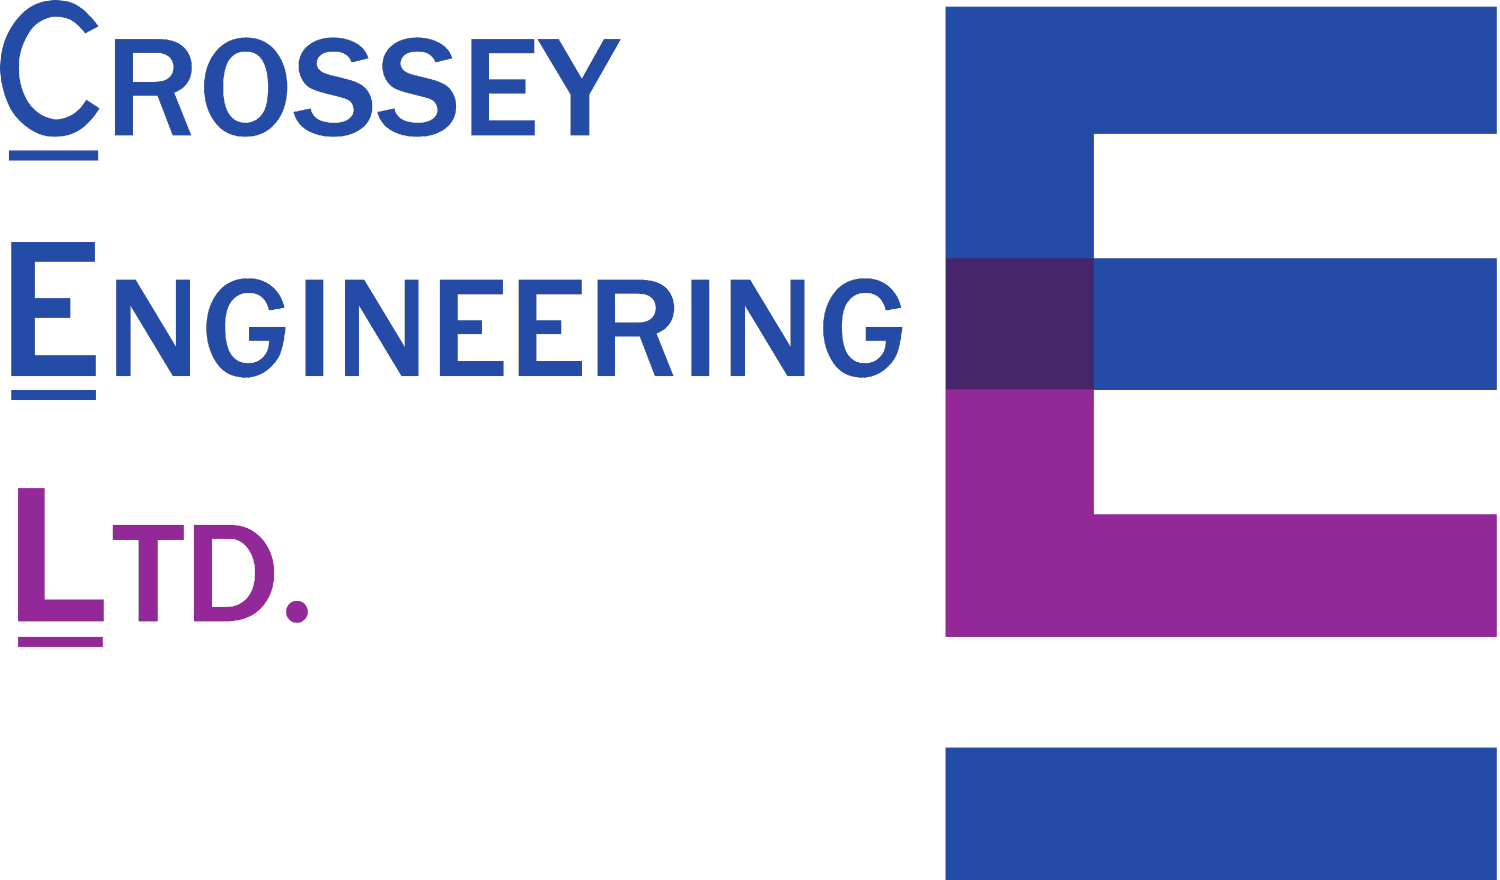 Crossey Engineering Ltd. logo